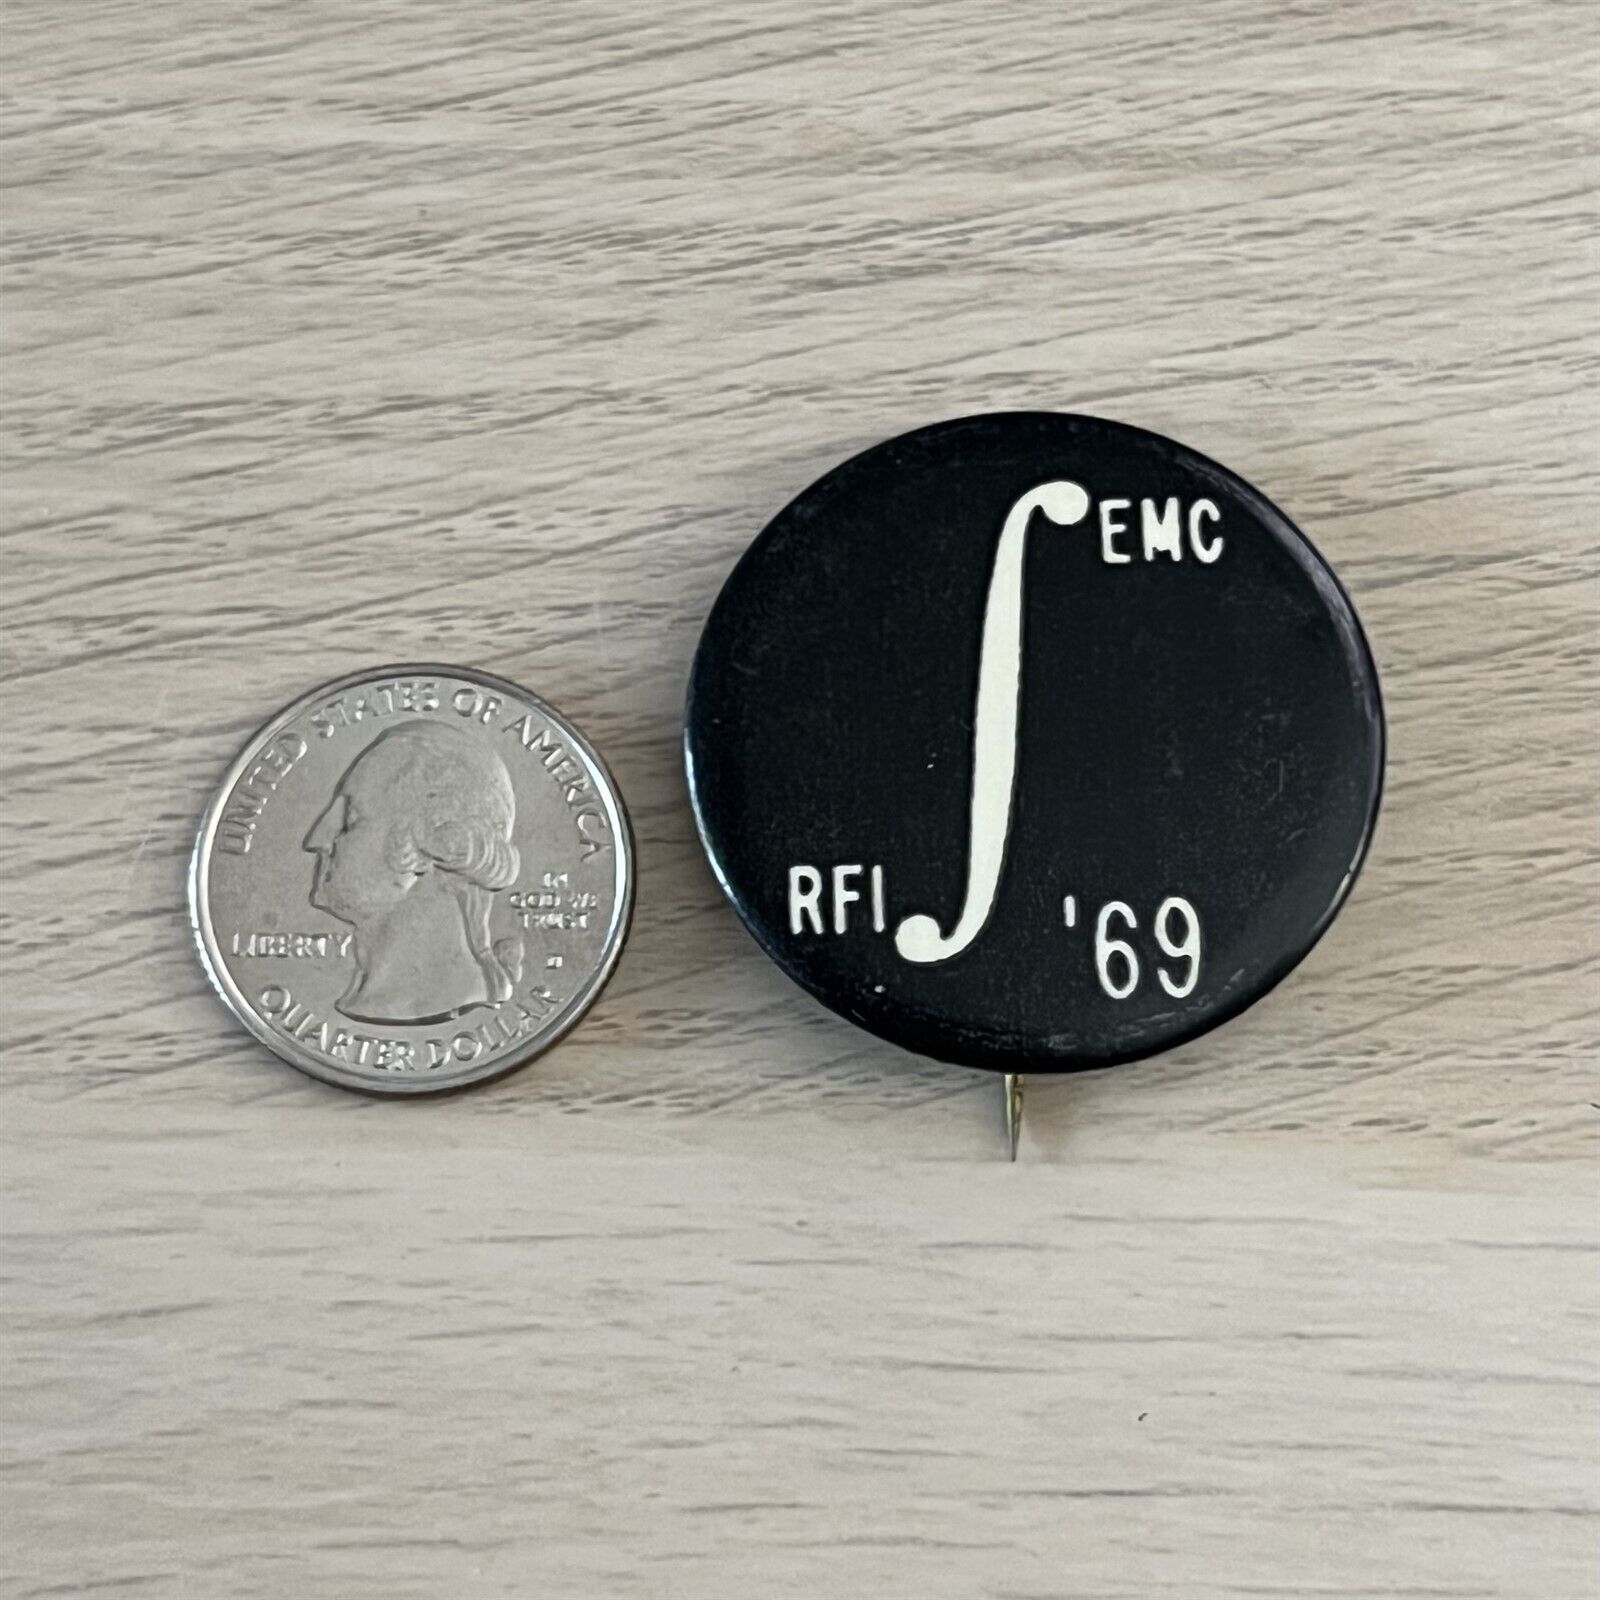 1969 RFI EMC Convention ? Radio Frequency Pin Pinback Button #44699